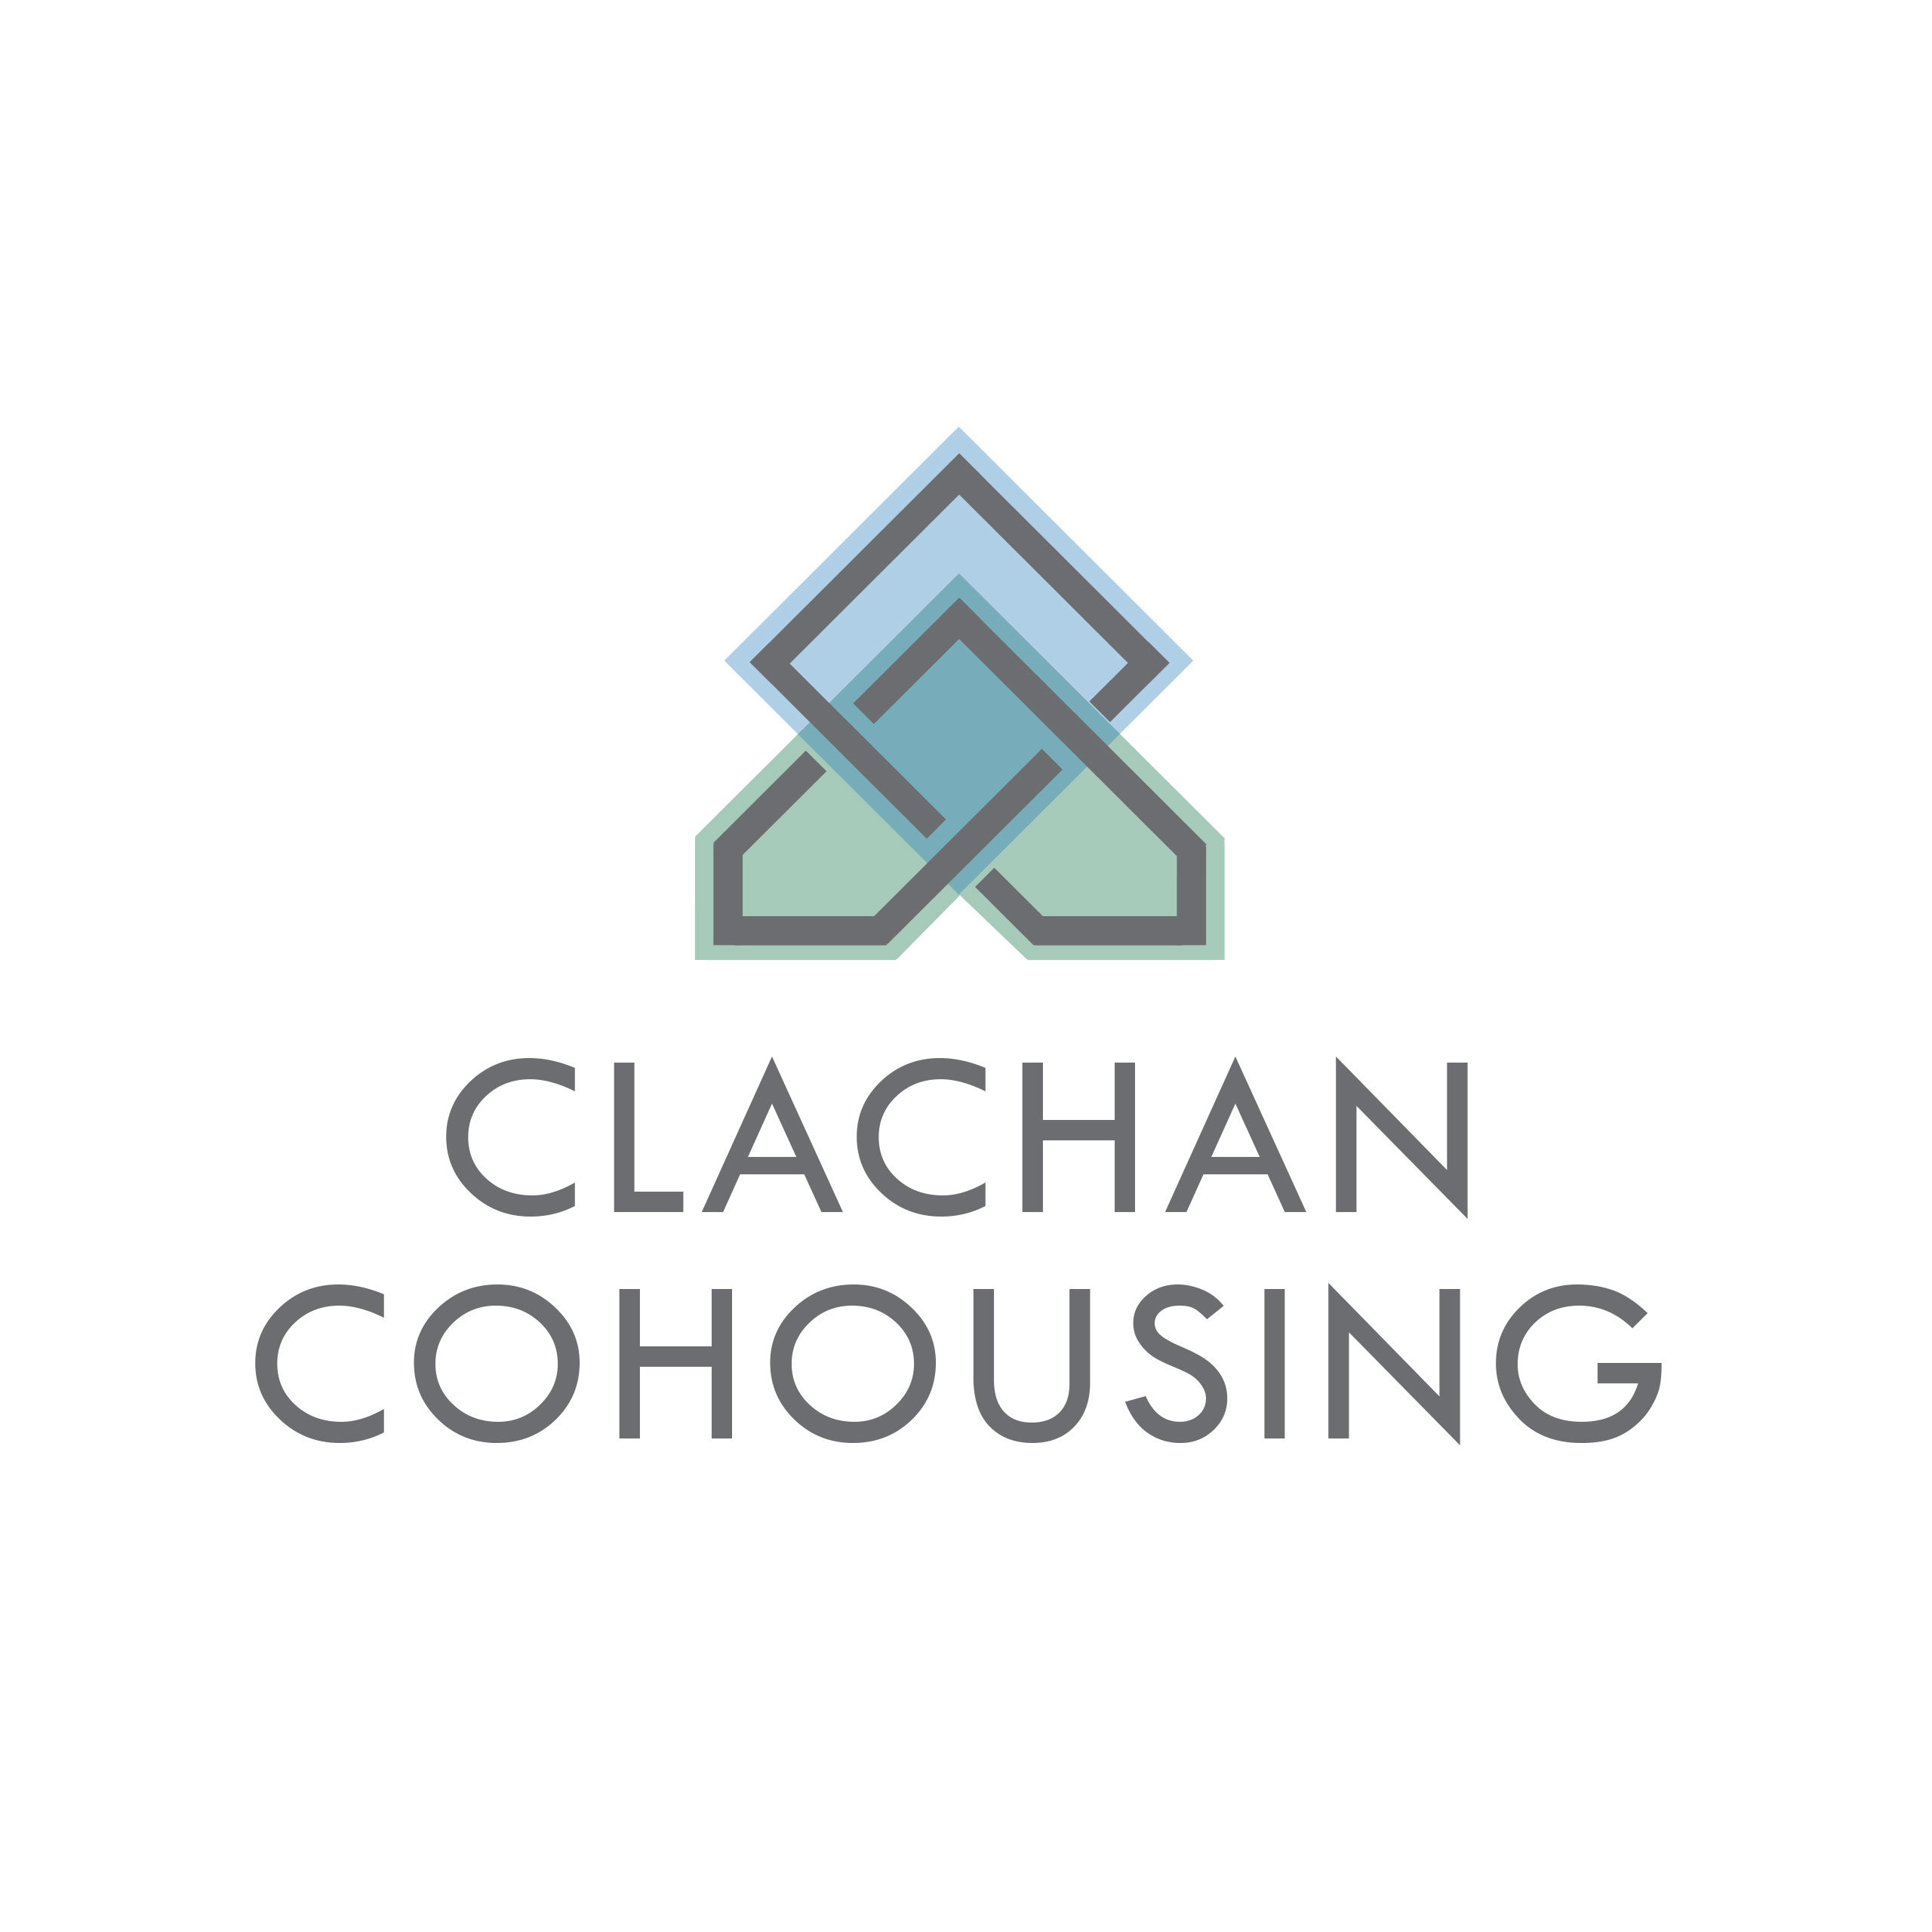 The logo of Clachan Cohousing